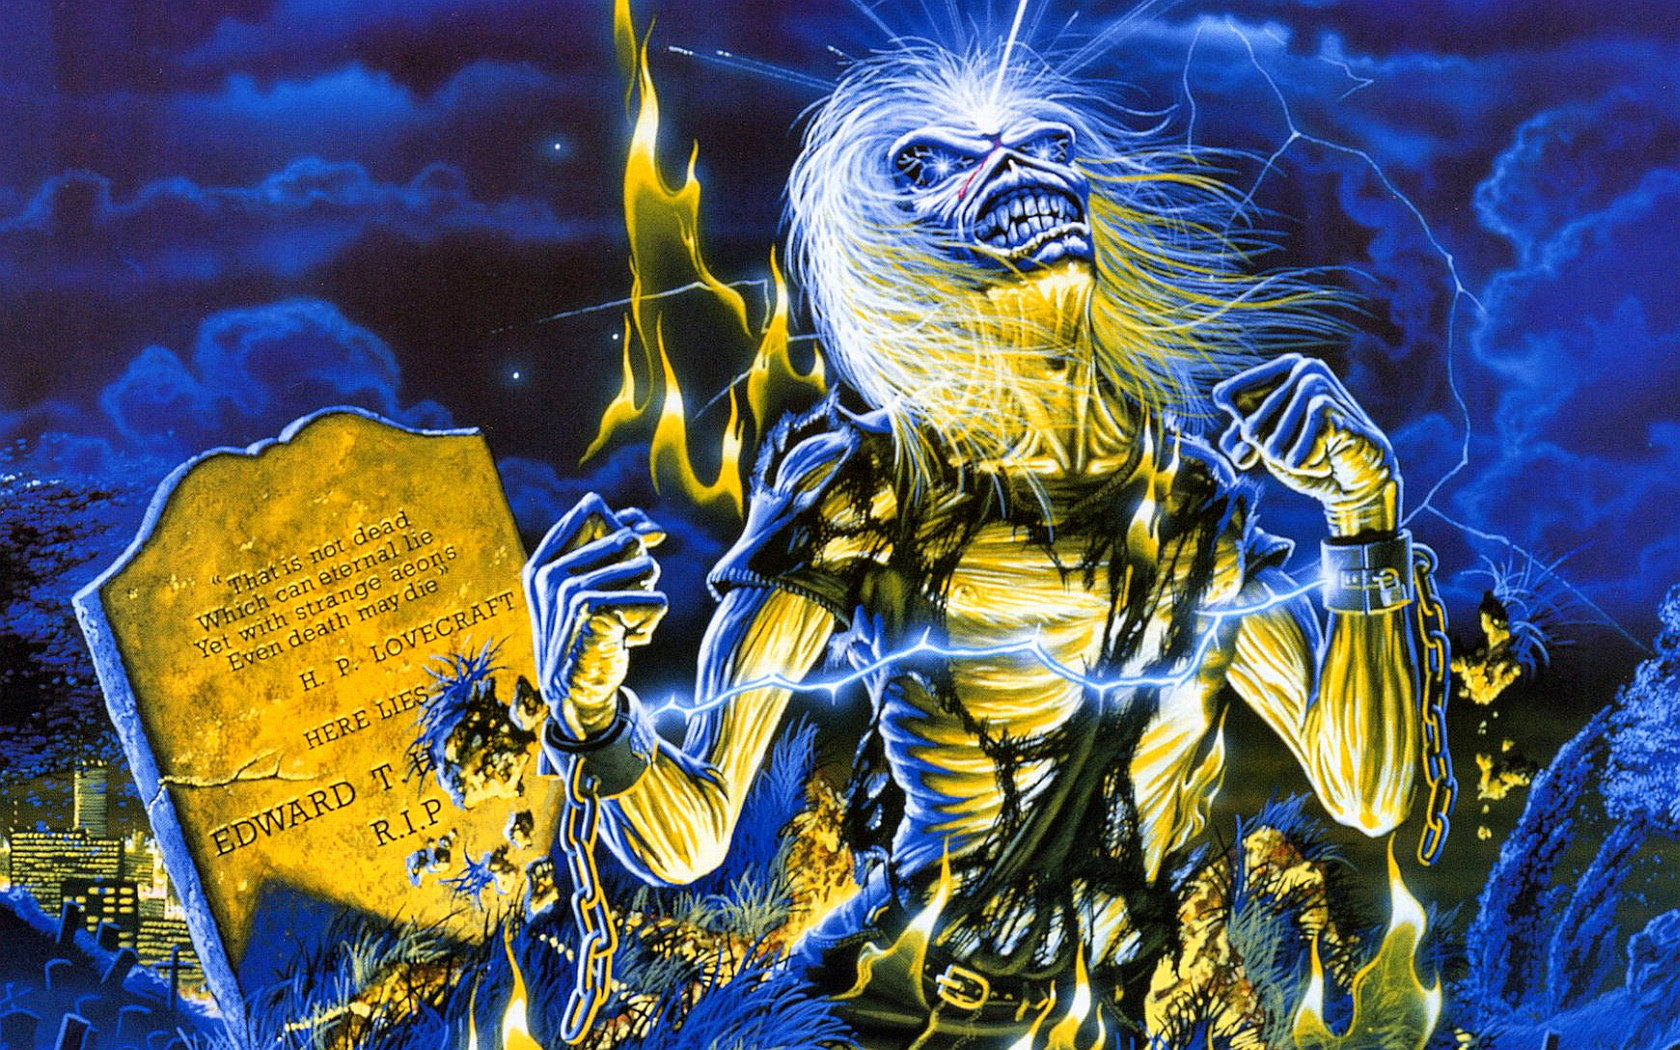 Iron Maiden Album Cover Art Derek Riggs Artworks Wallpaper